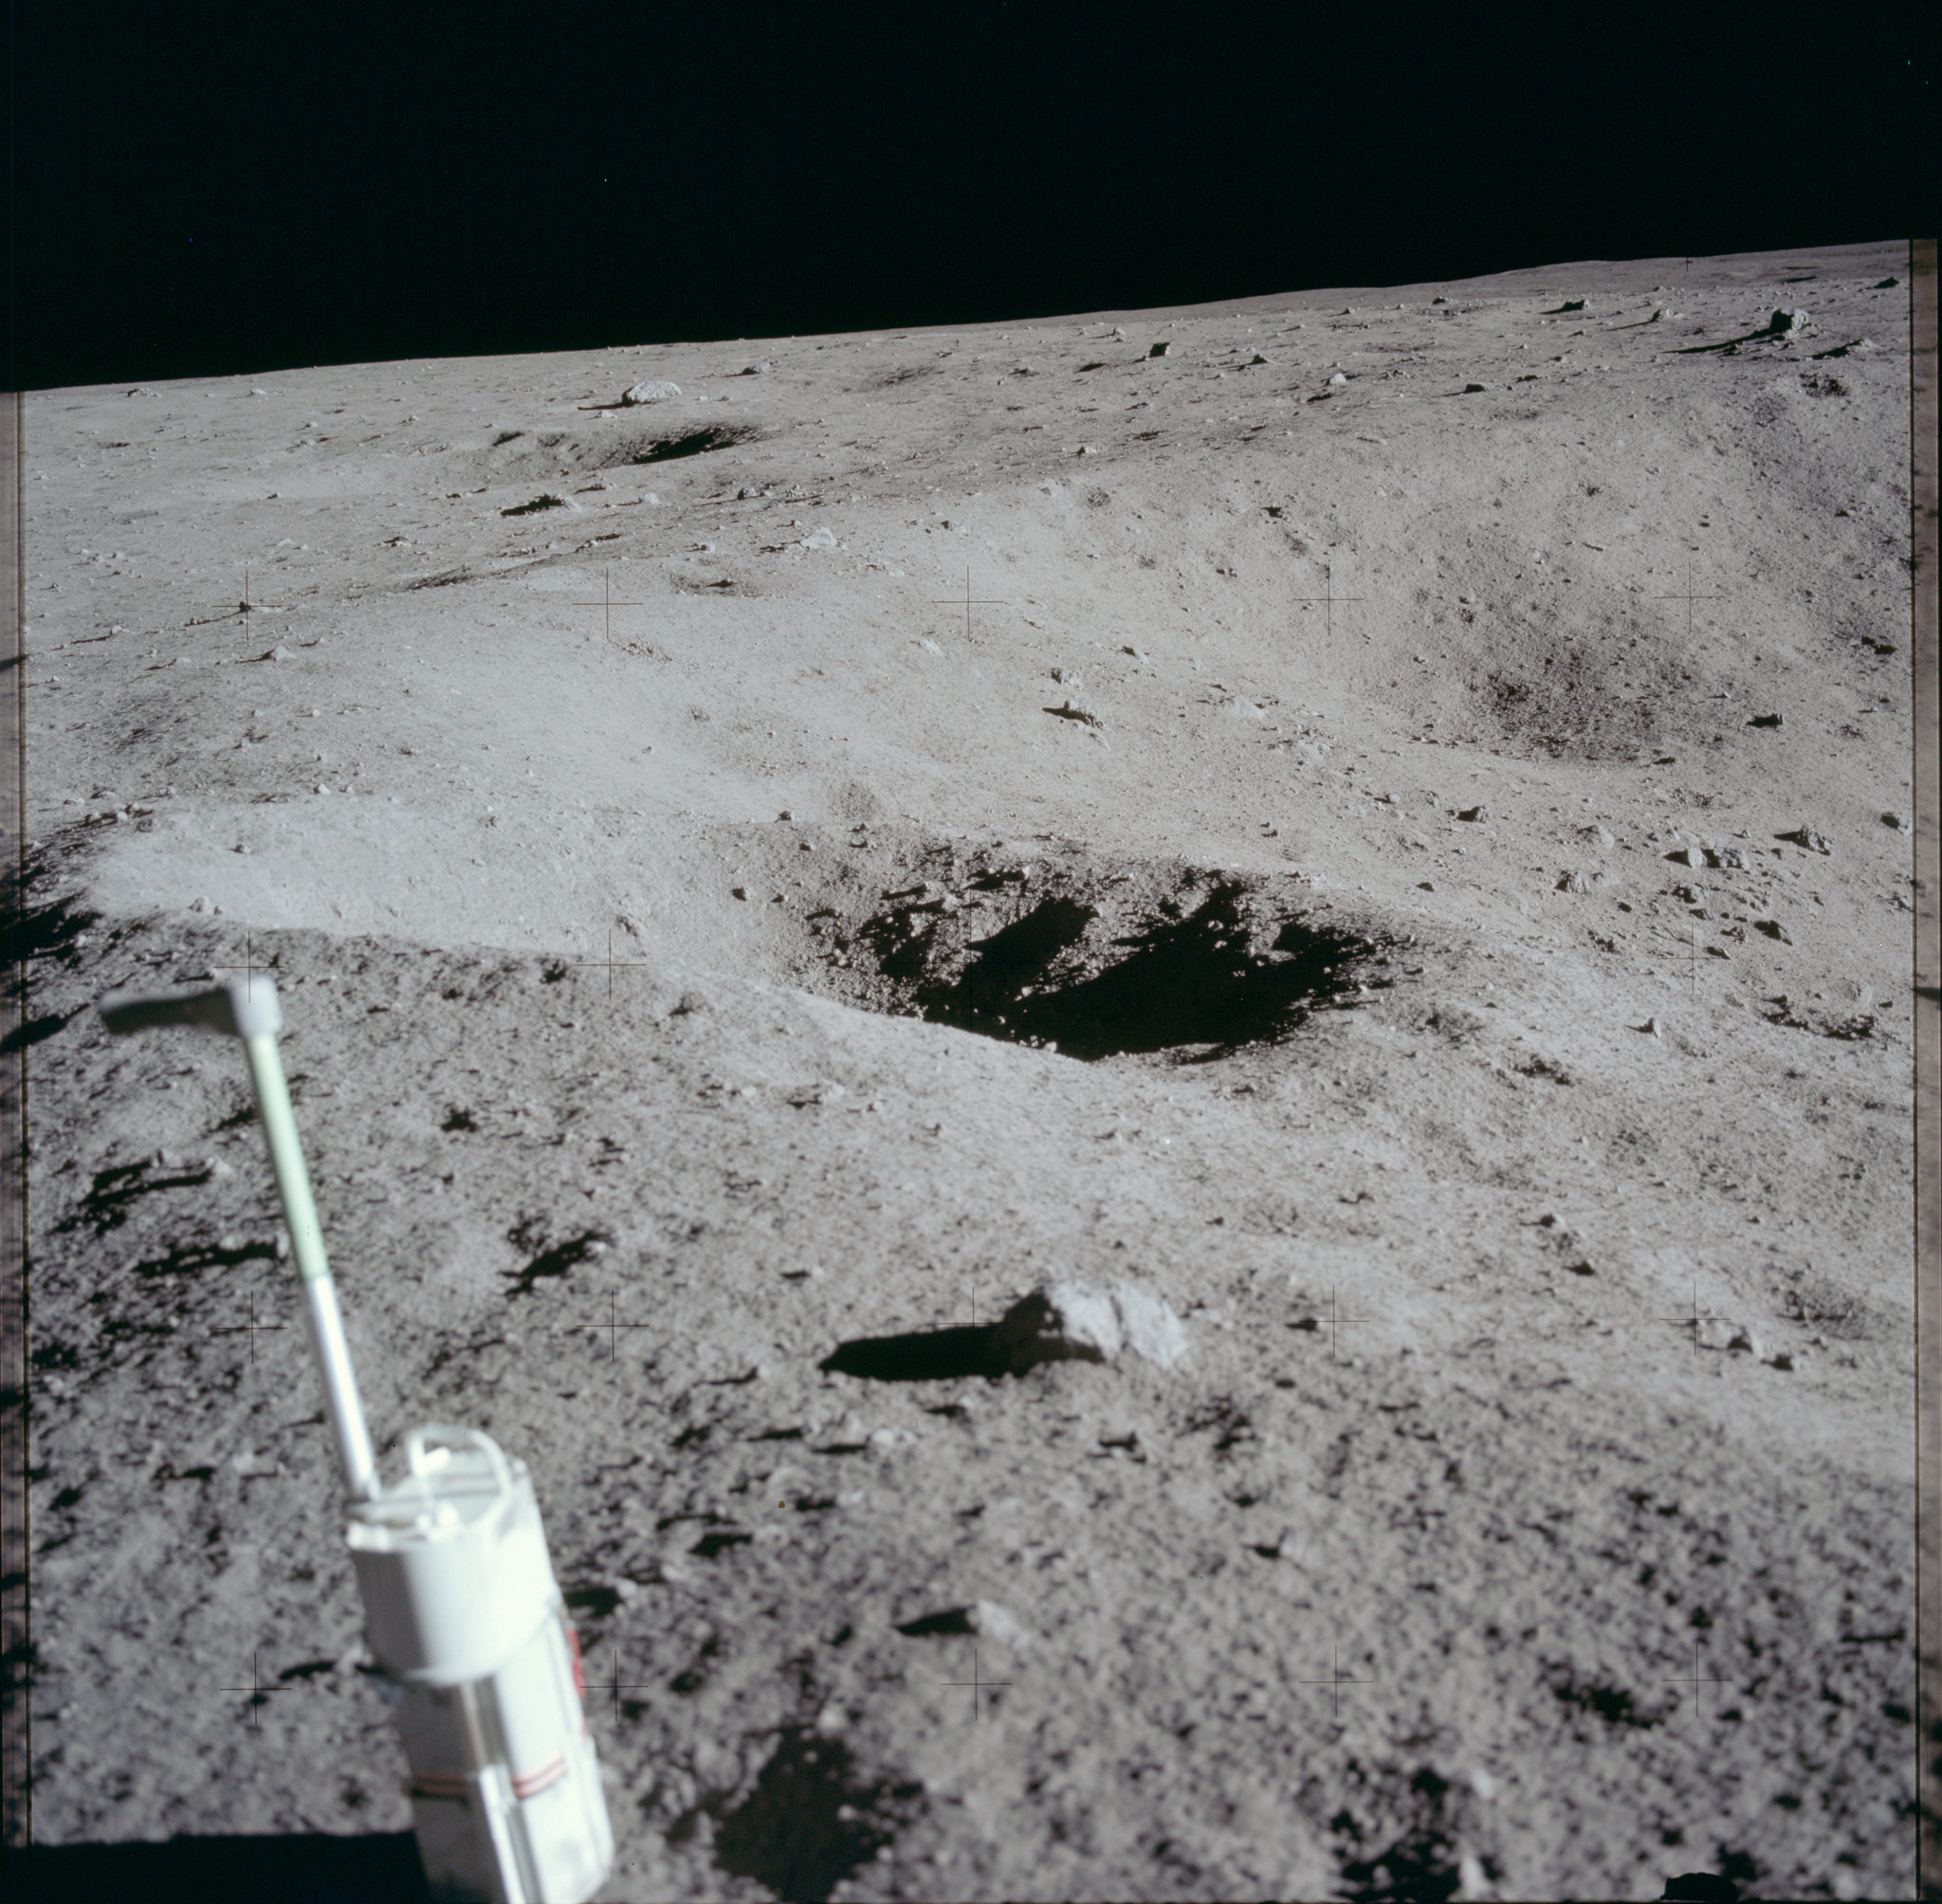 Apollo 11 Kodak Stereo Close-up Camera on the Moon's surface